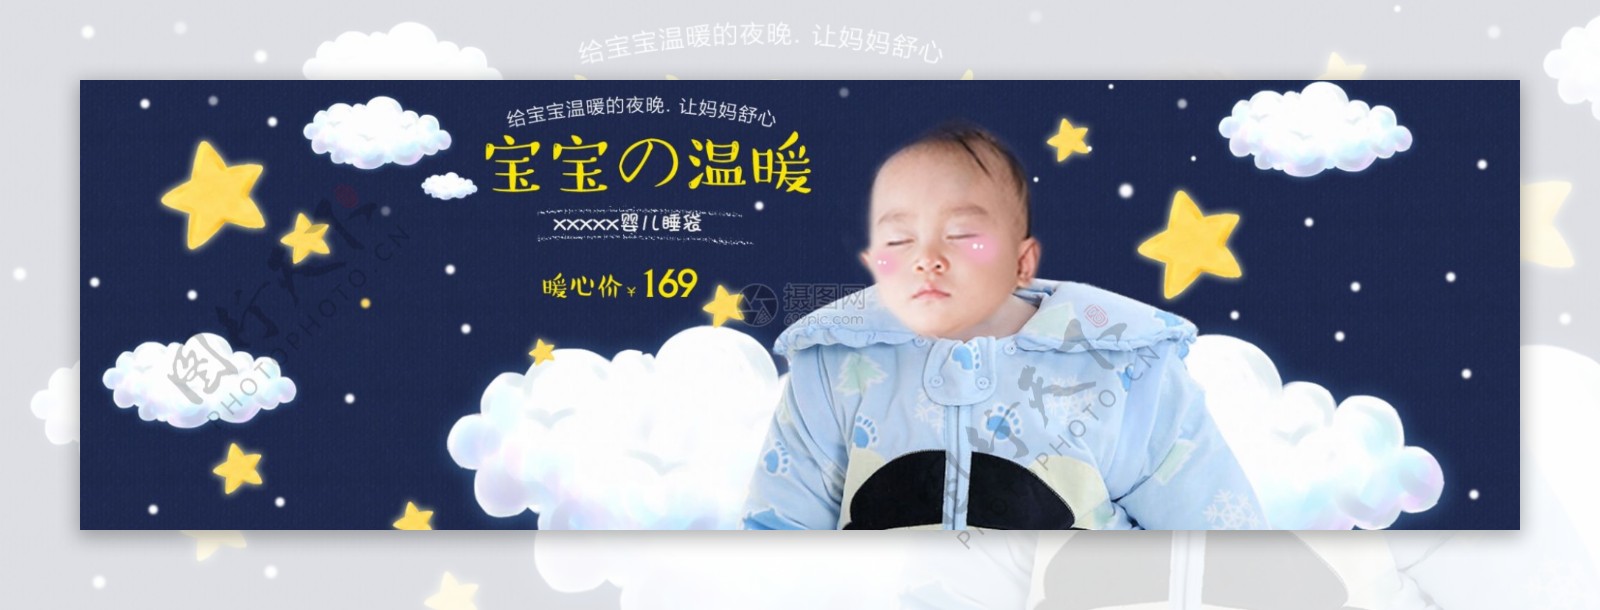 婴儿用品睡袋淘宝banner